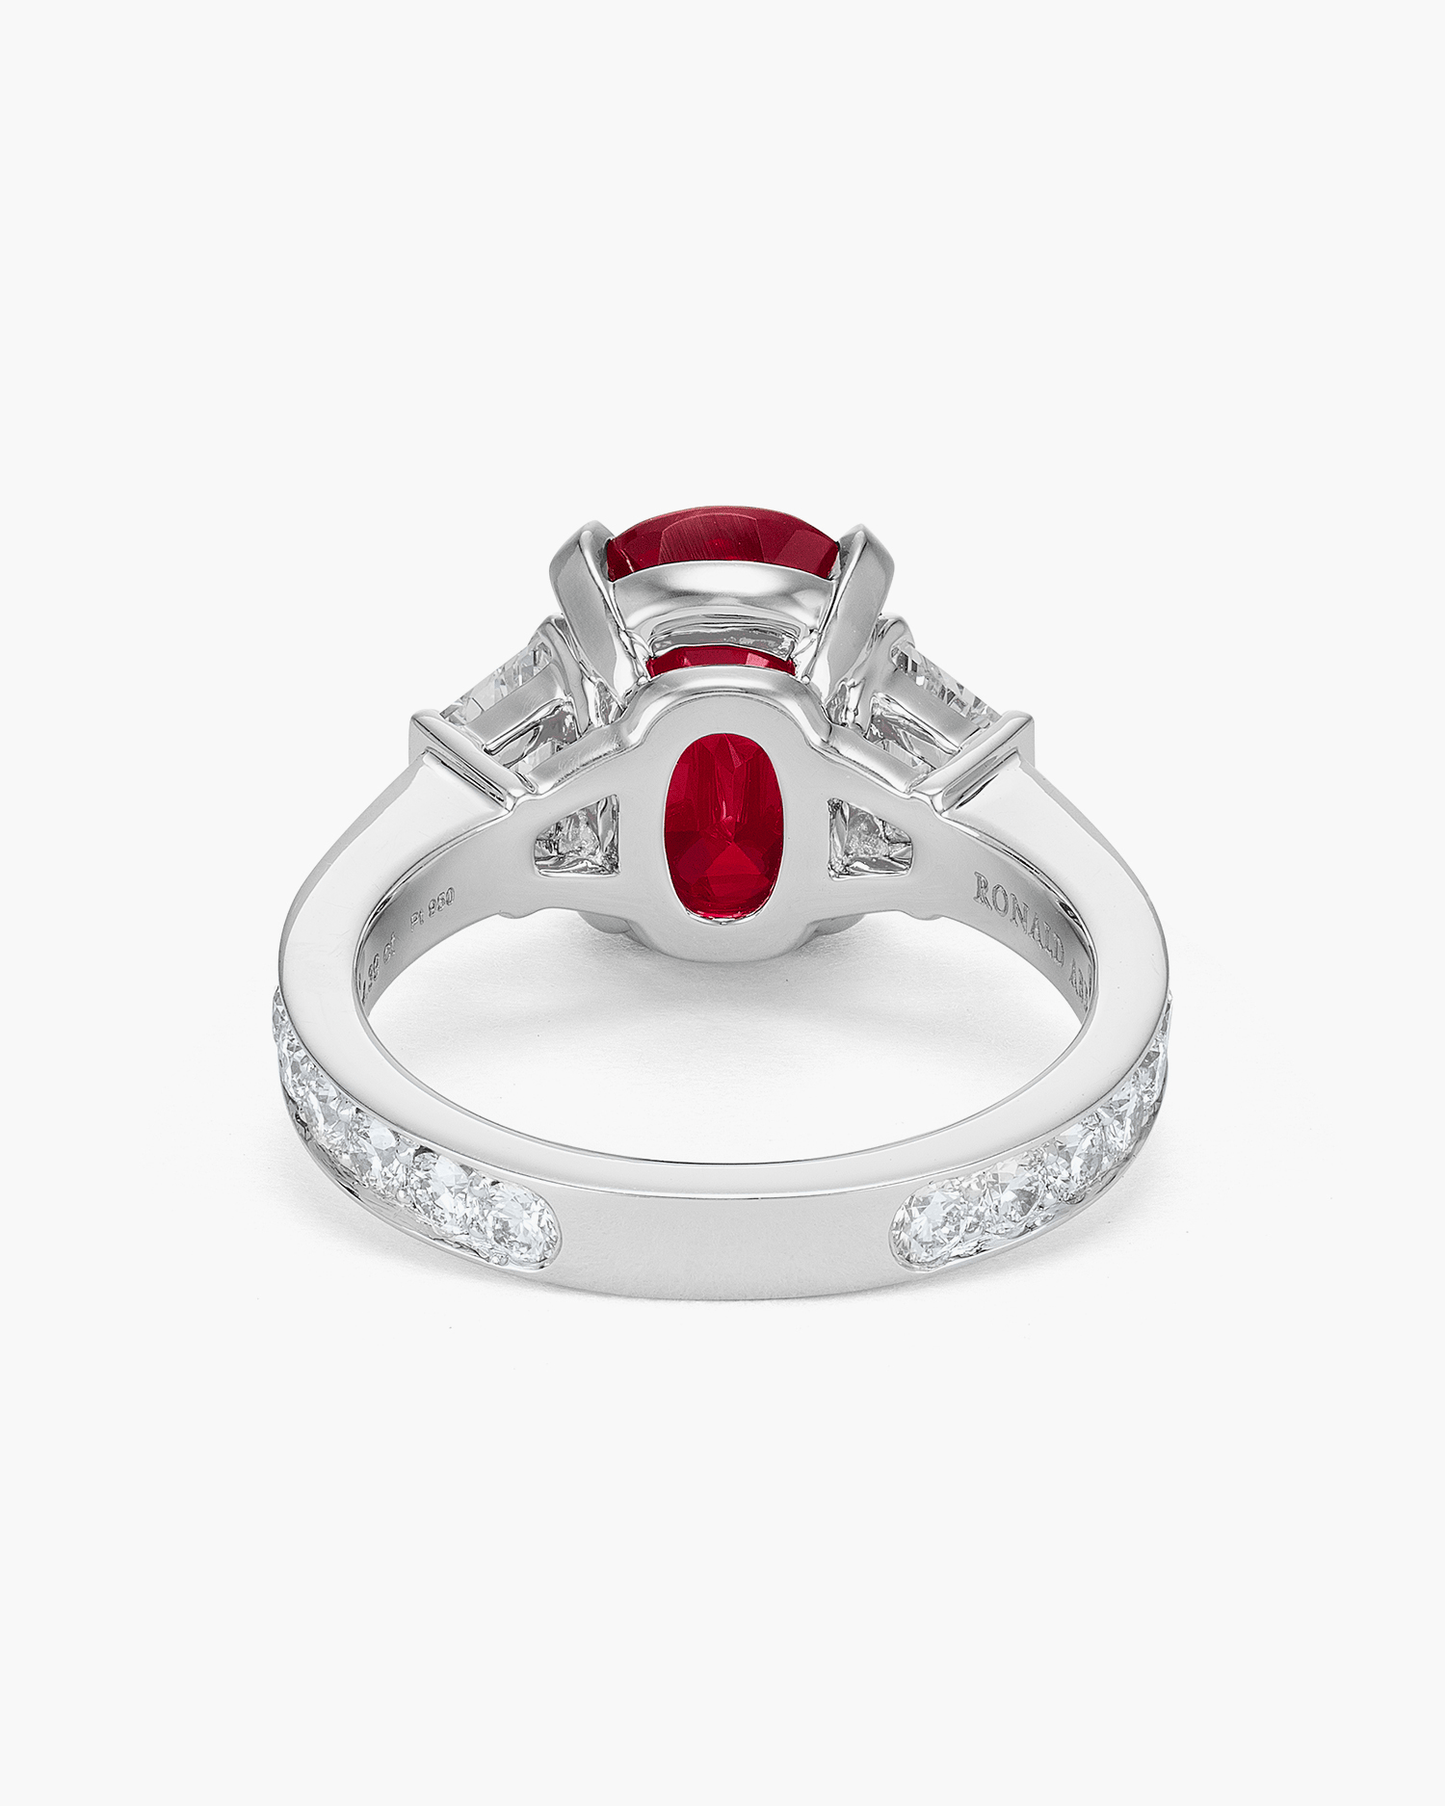 4.39 carat Oval Shape Burmese Ruby and Diamond Ring